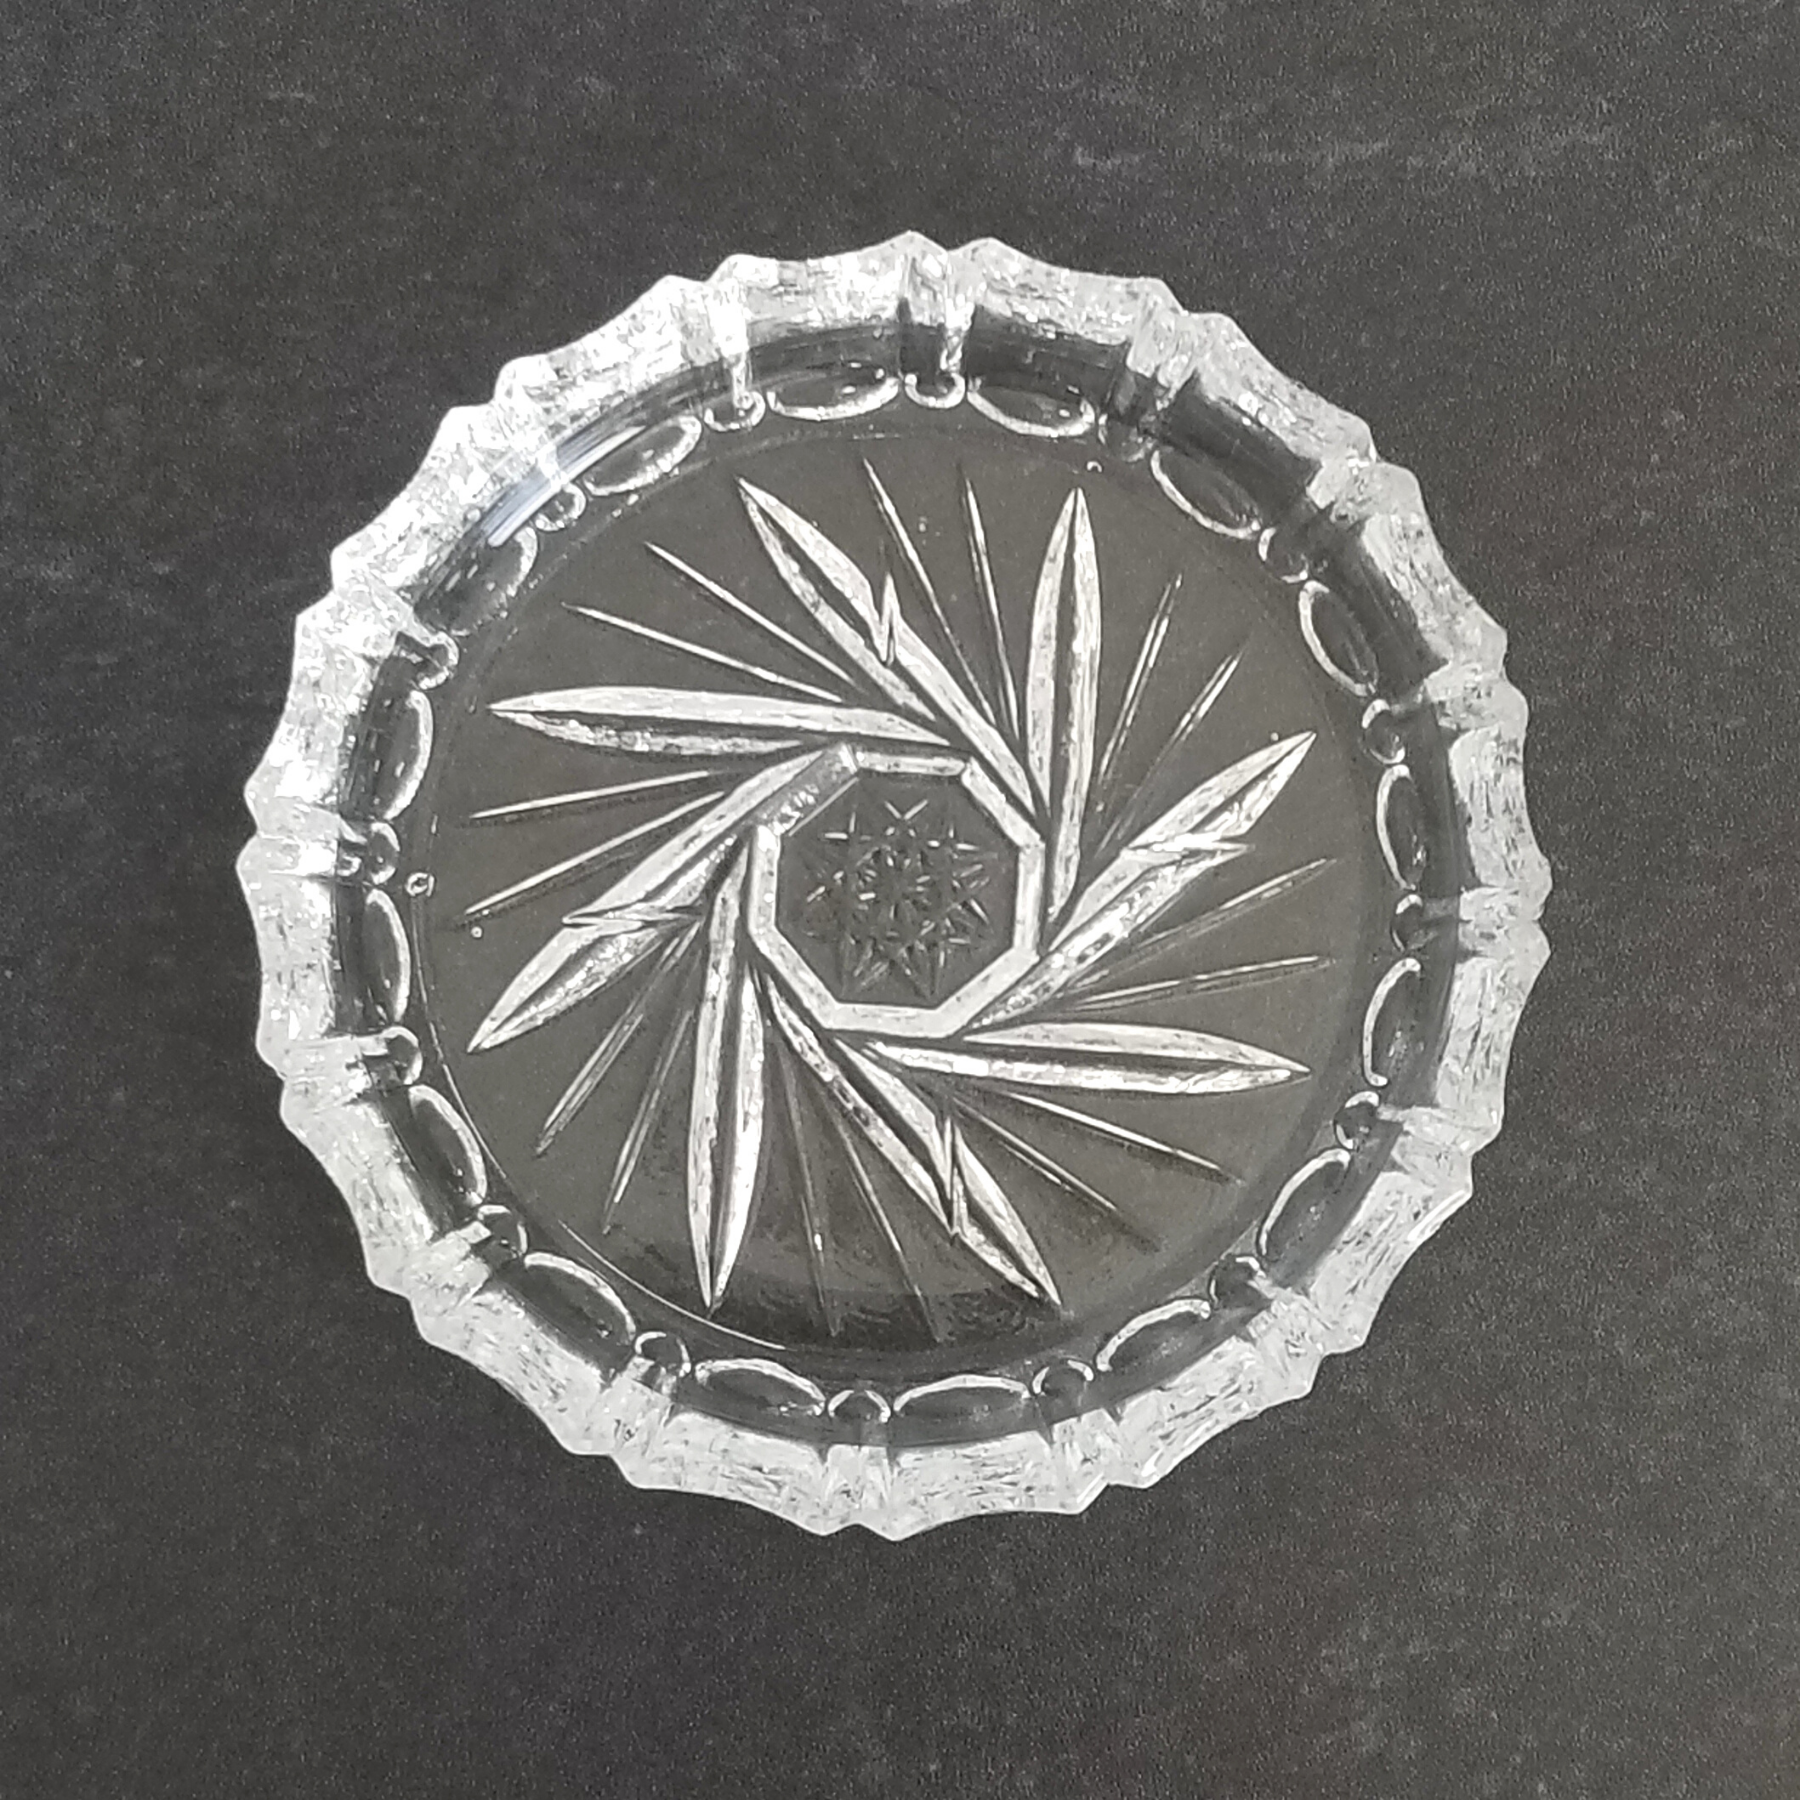 Star Pinwheel Cut Crystal/Glass Coasters Detail